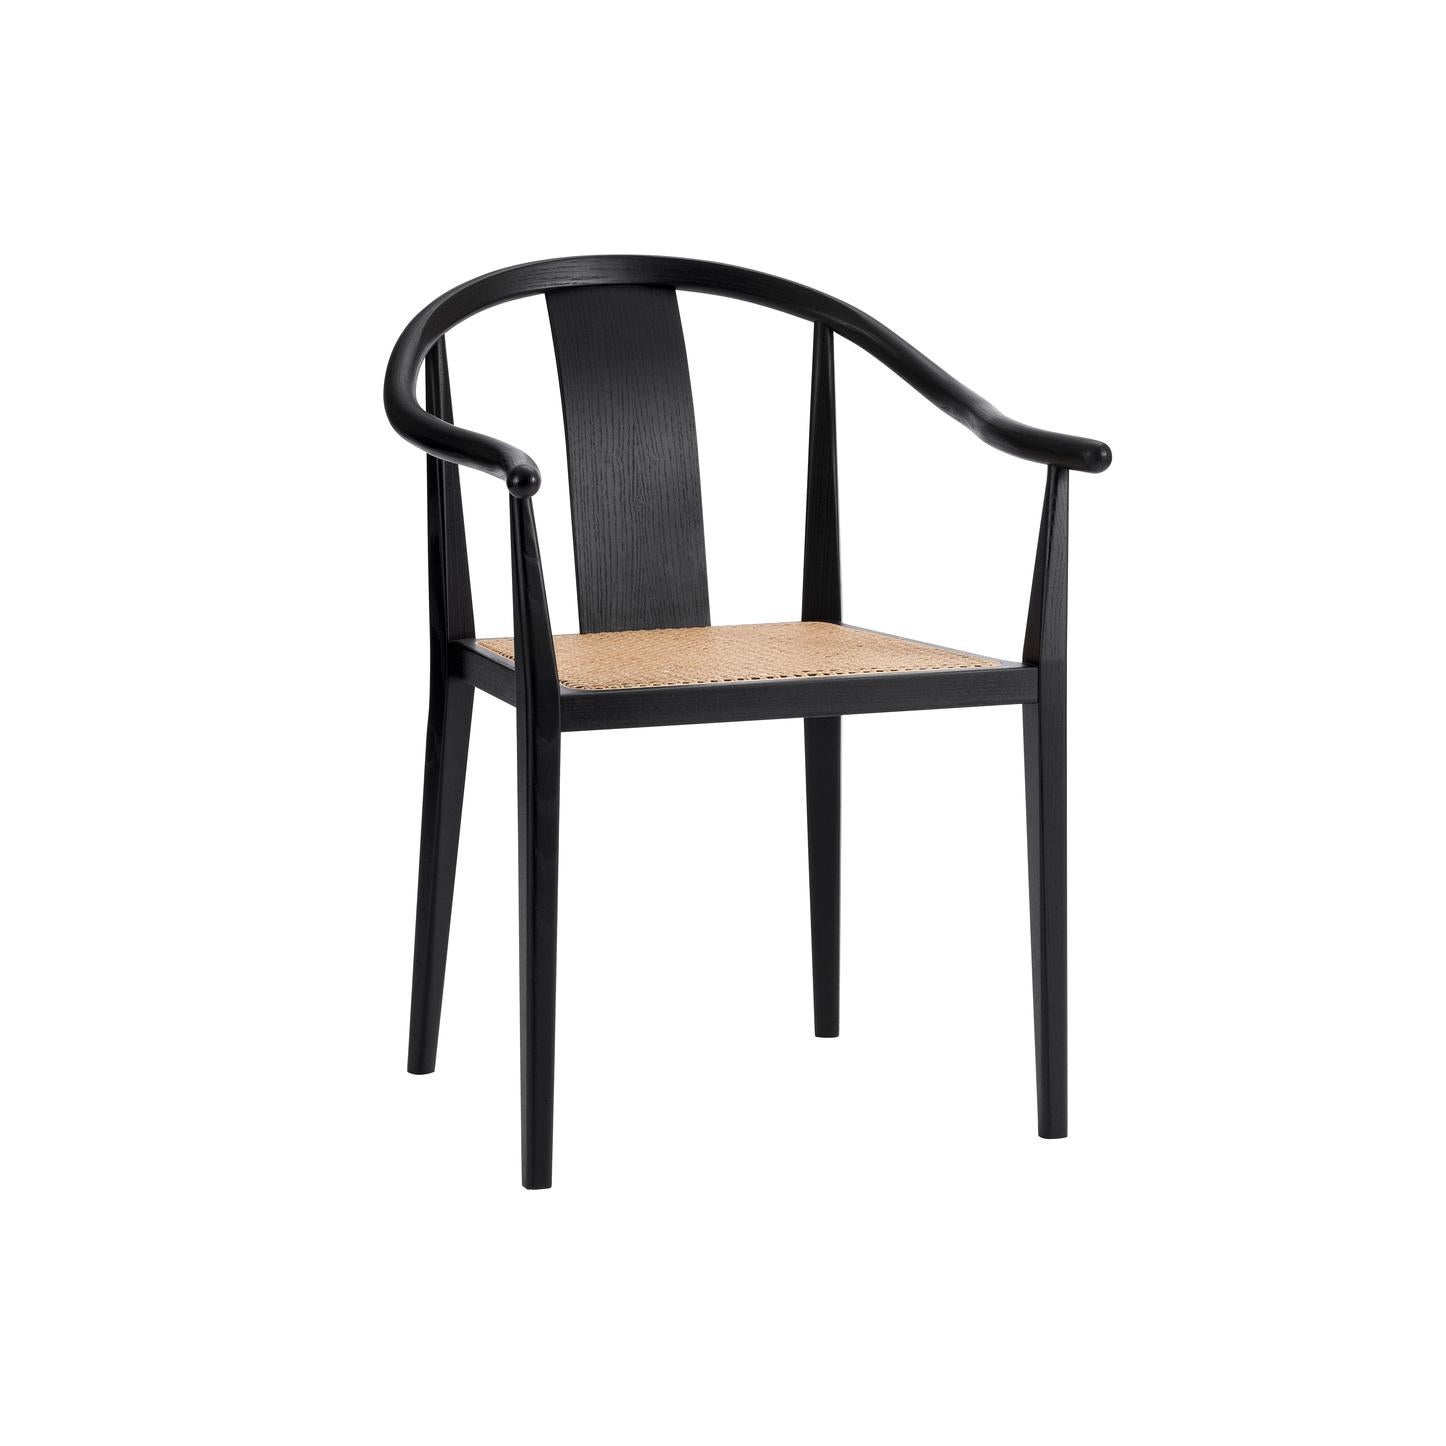 'Shanghai' Chair by Norr11, Black Oak, Natural Rattan For Sale 1